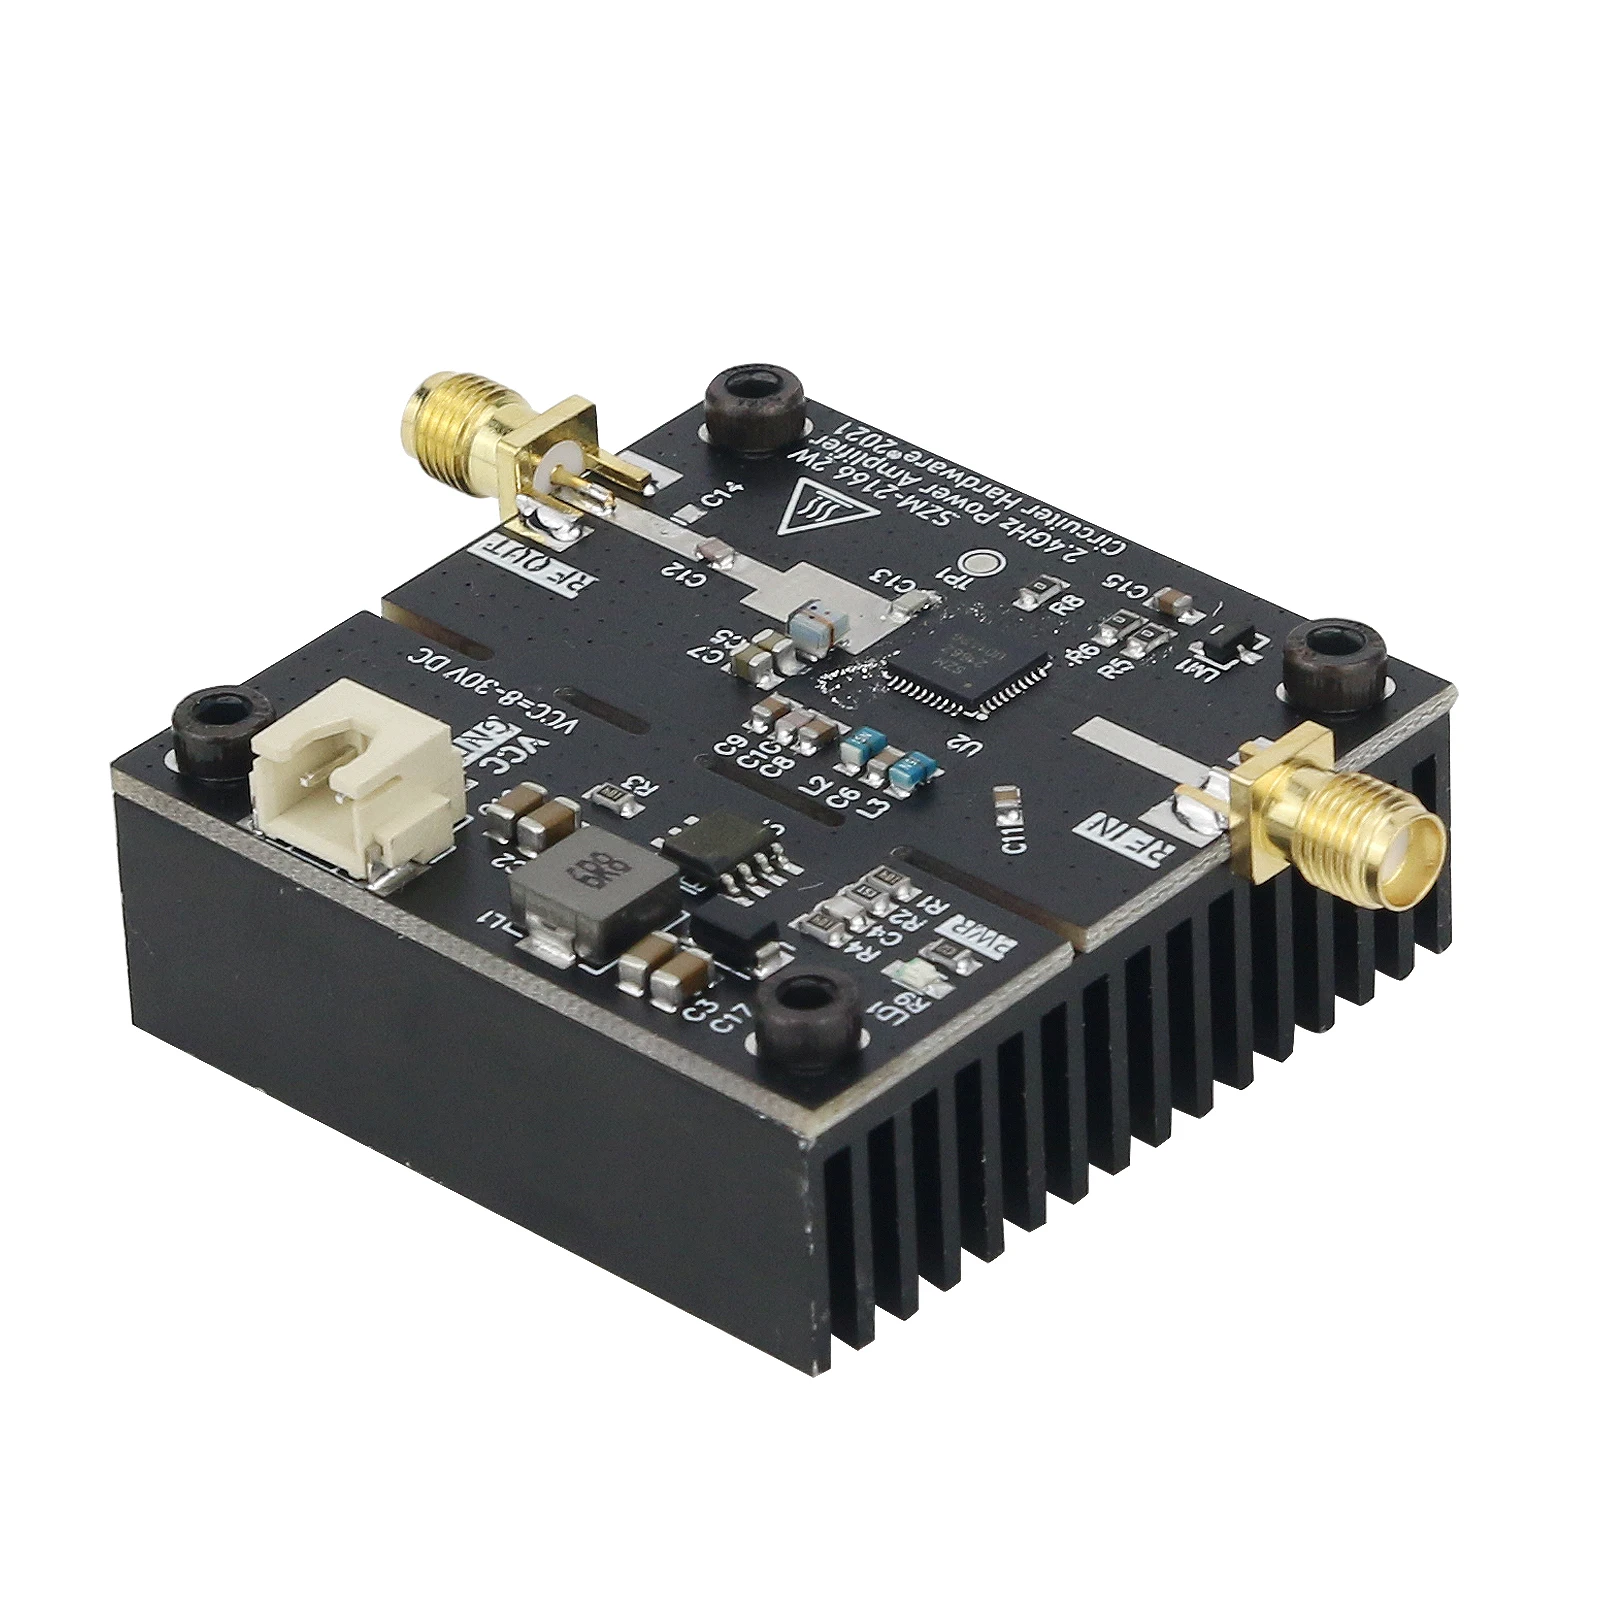 SZM2166 RF Power Amplifier 2.4GHz 33dBm 8-23V Voltage for Signal Amplification 